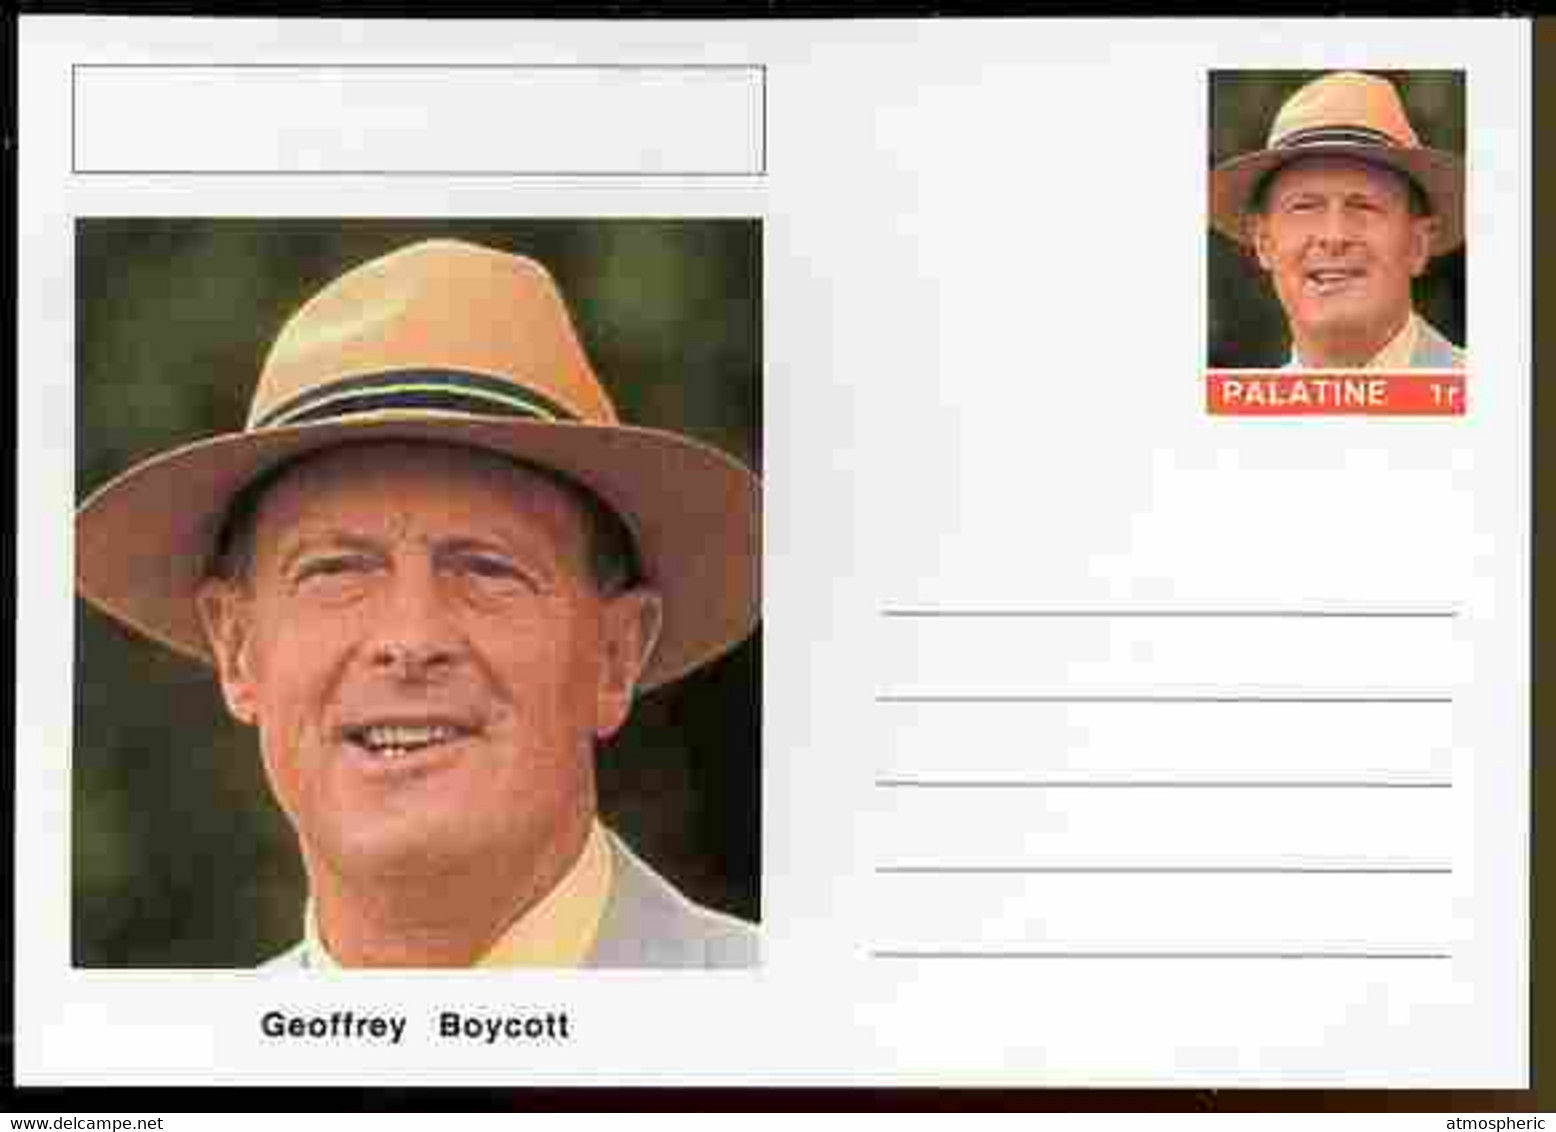 Palatine (Fantasy) Personalities - Geoffrey Boycott (cricket) Postal Stationery Card Unused And Fine - Cricket